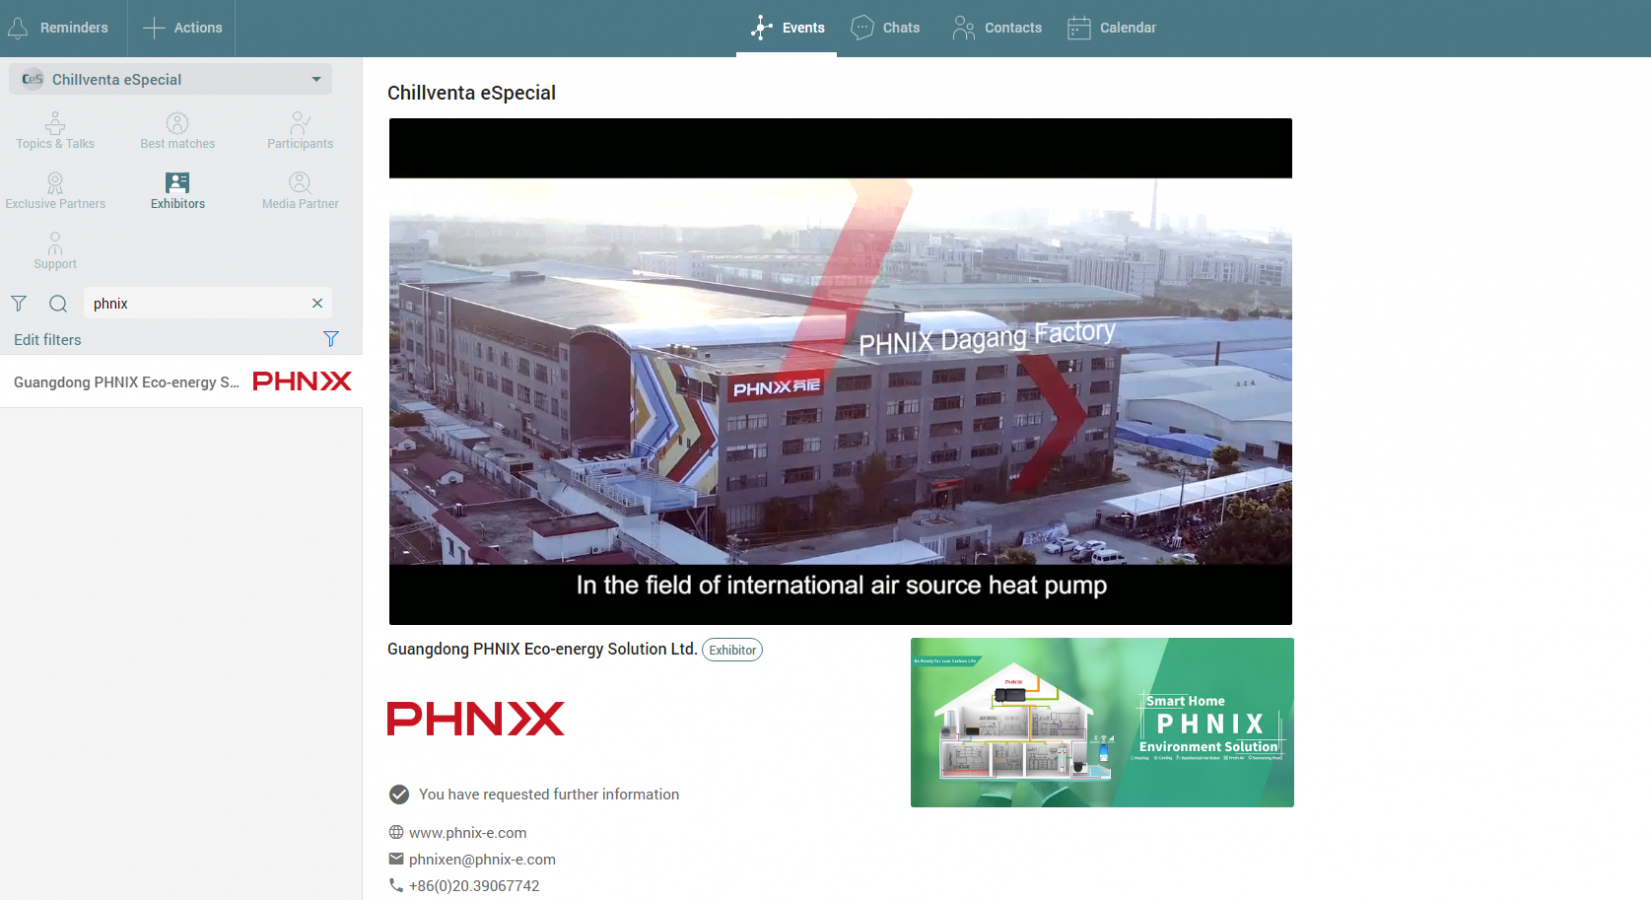 PHNIX Will Attend Chillventa eSpecial Online Exhibition